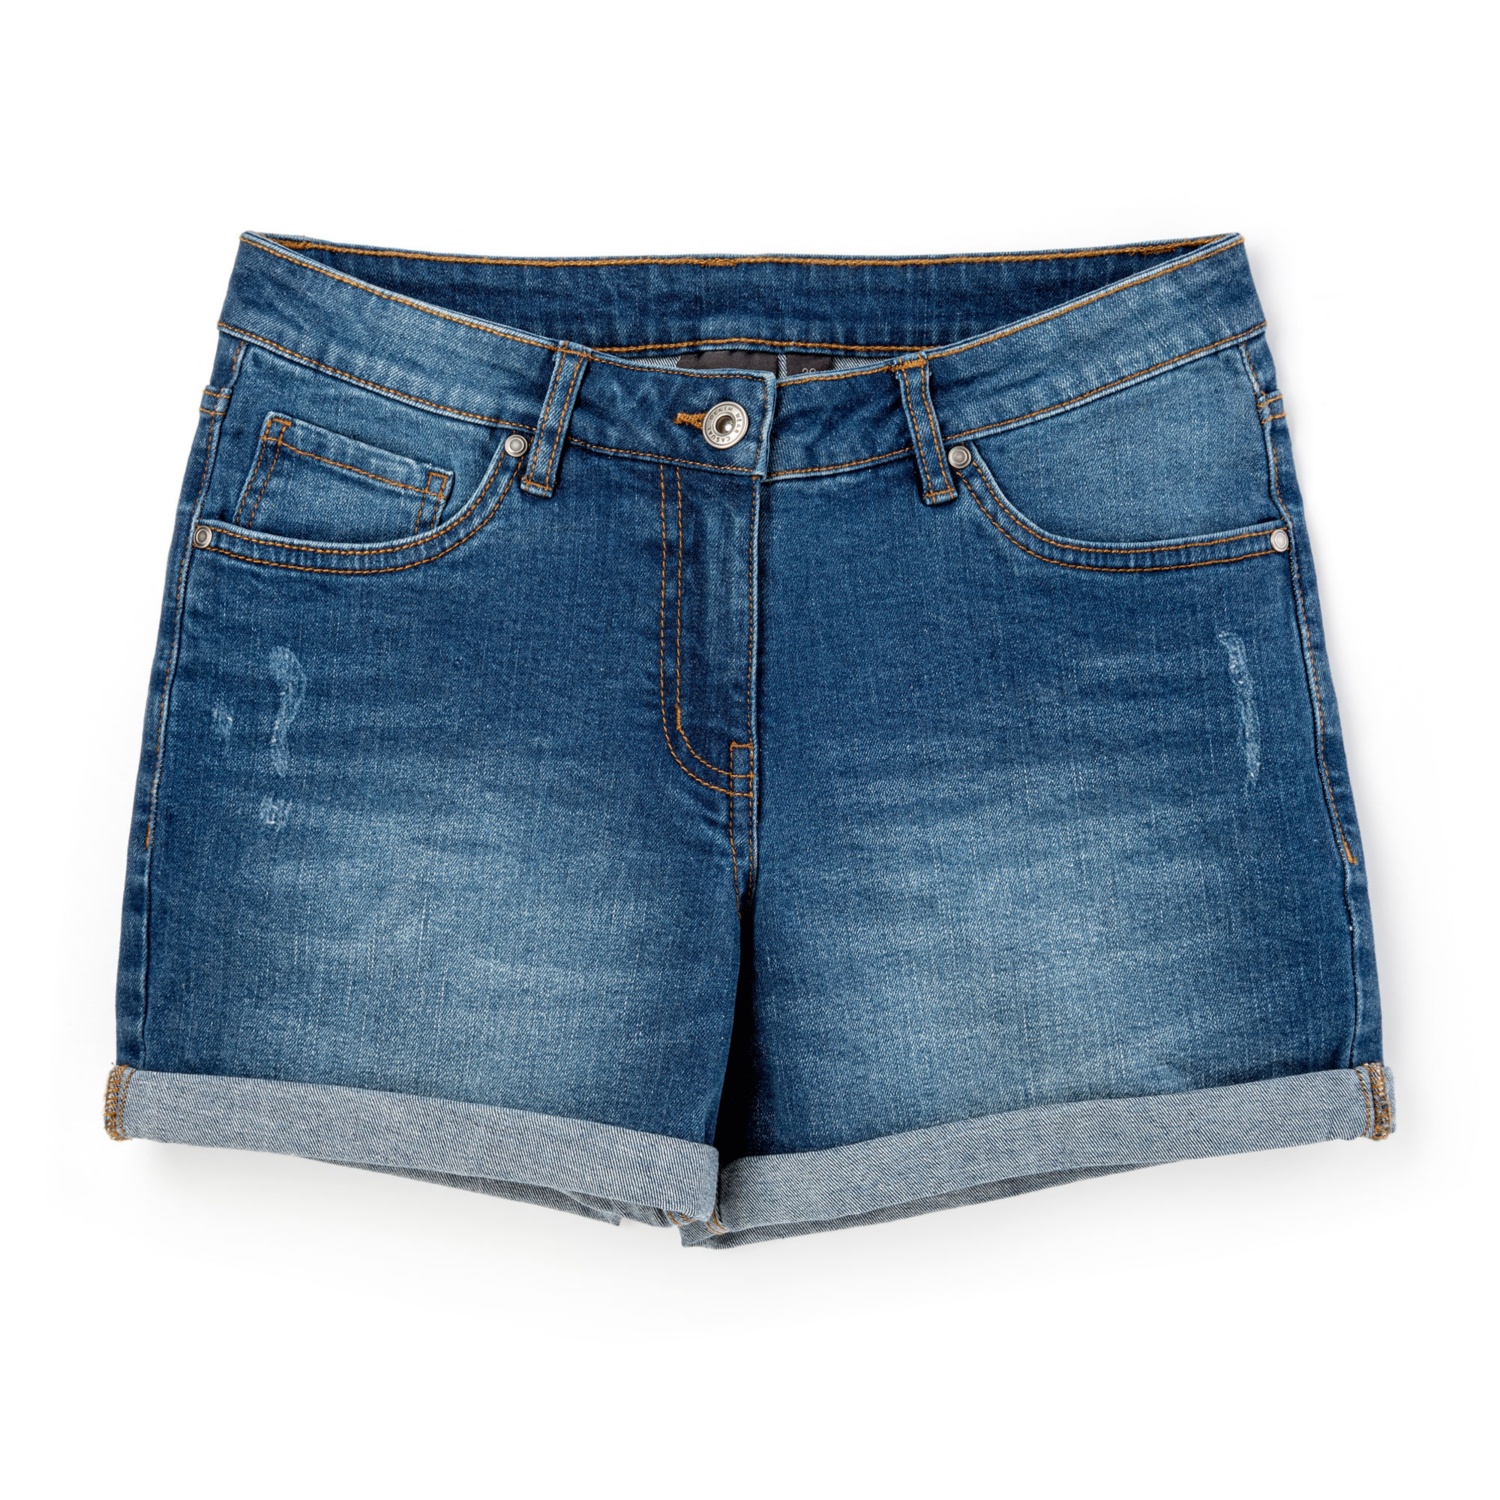 BLUE MOTION Damen-Jeans-Shorts, Baumwolle (BIO), Blau, Gr. 38